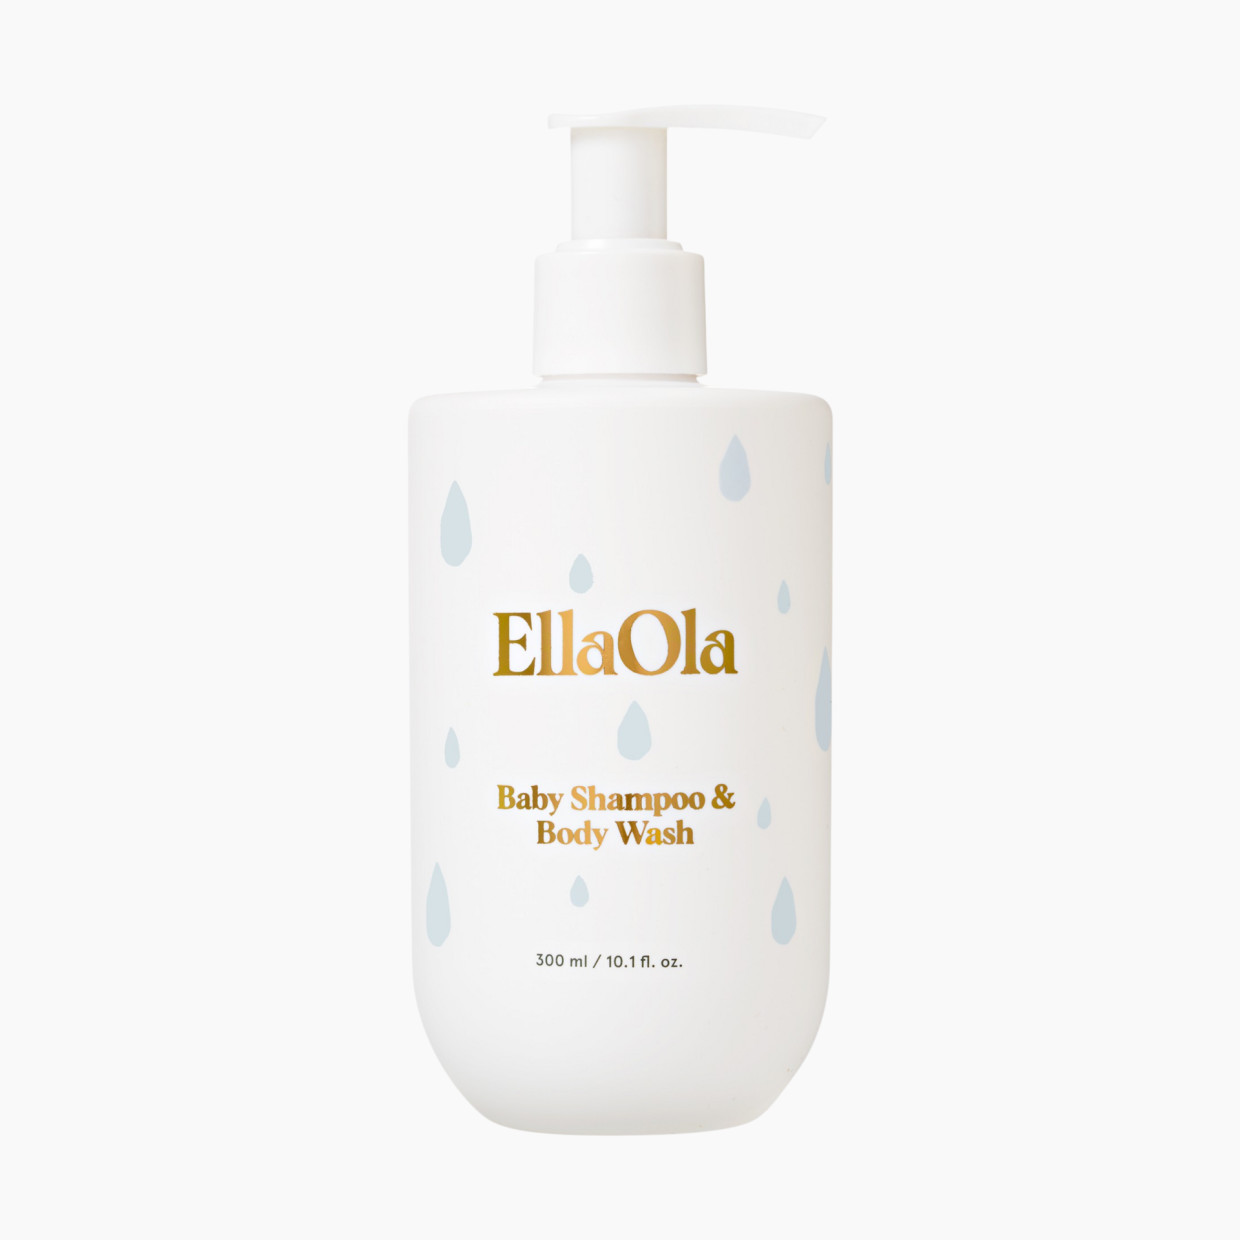 Ella Ola Superfood Baby Shampoo & Body Wash - White.